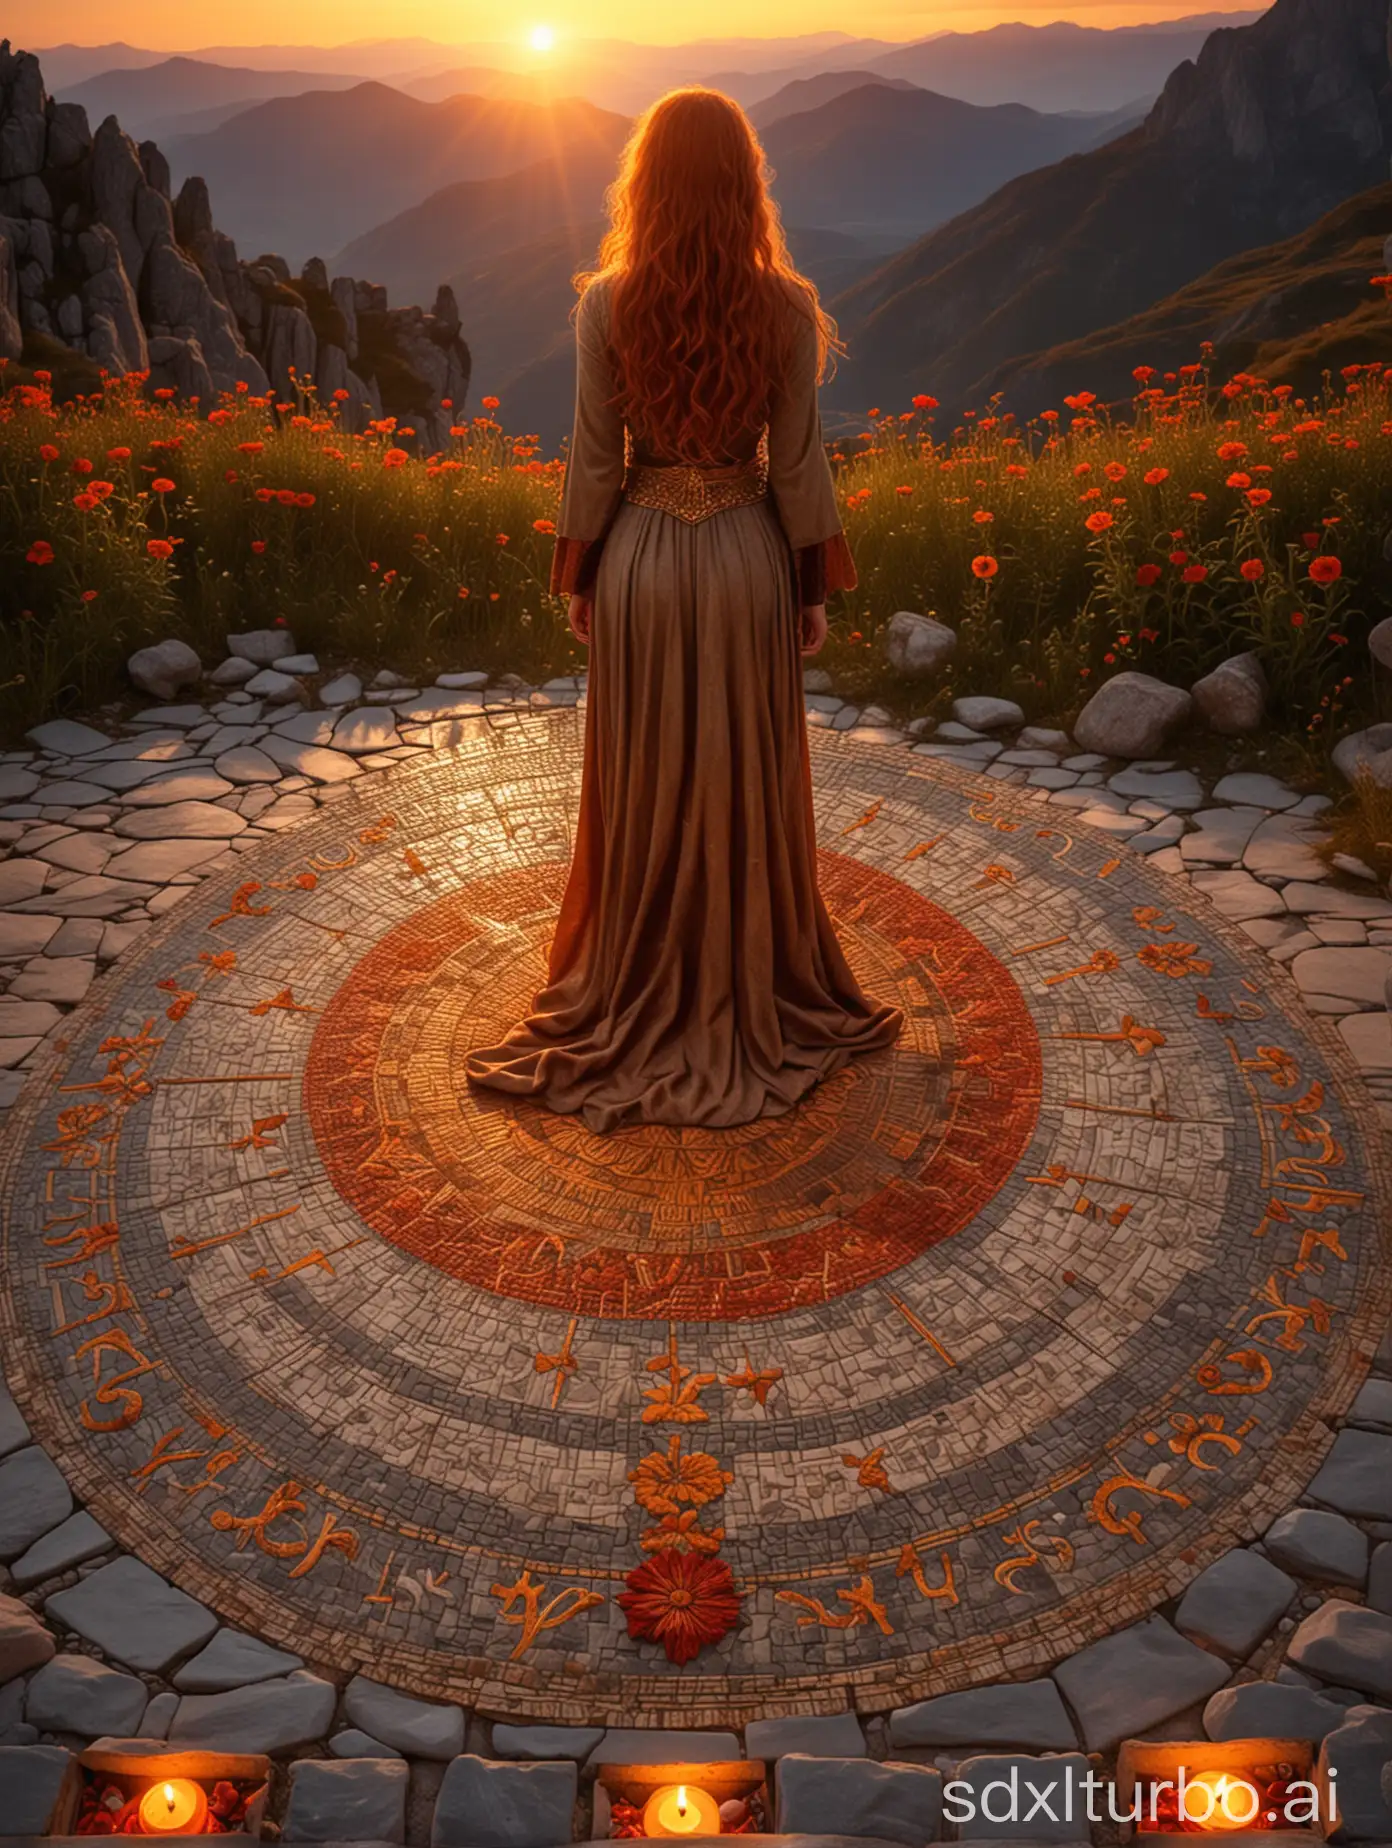 Majestic-Viking-Goddess-at-Sunset-Stone-Sun-Mosaic-and-Red-Candles